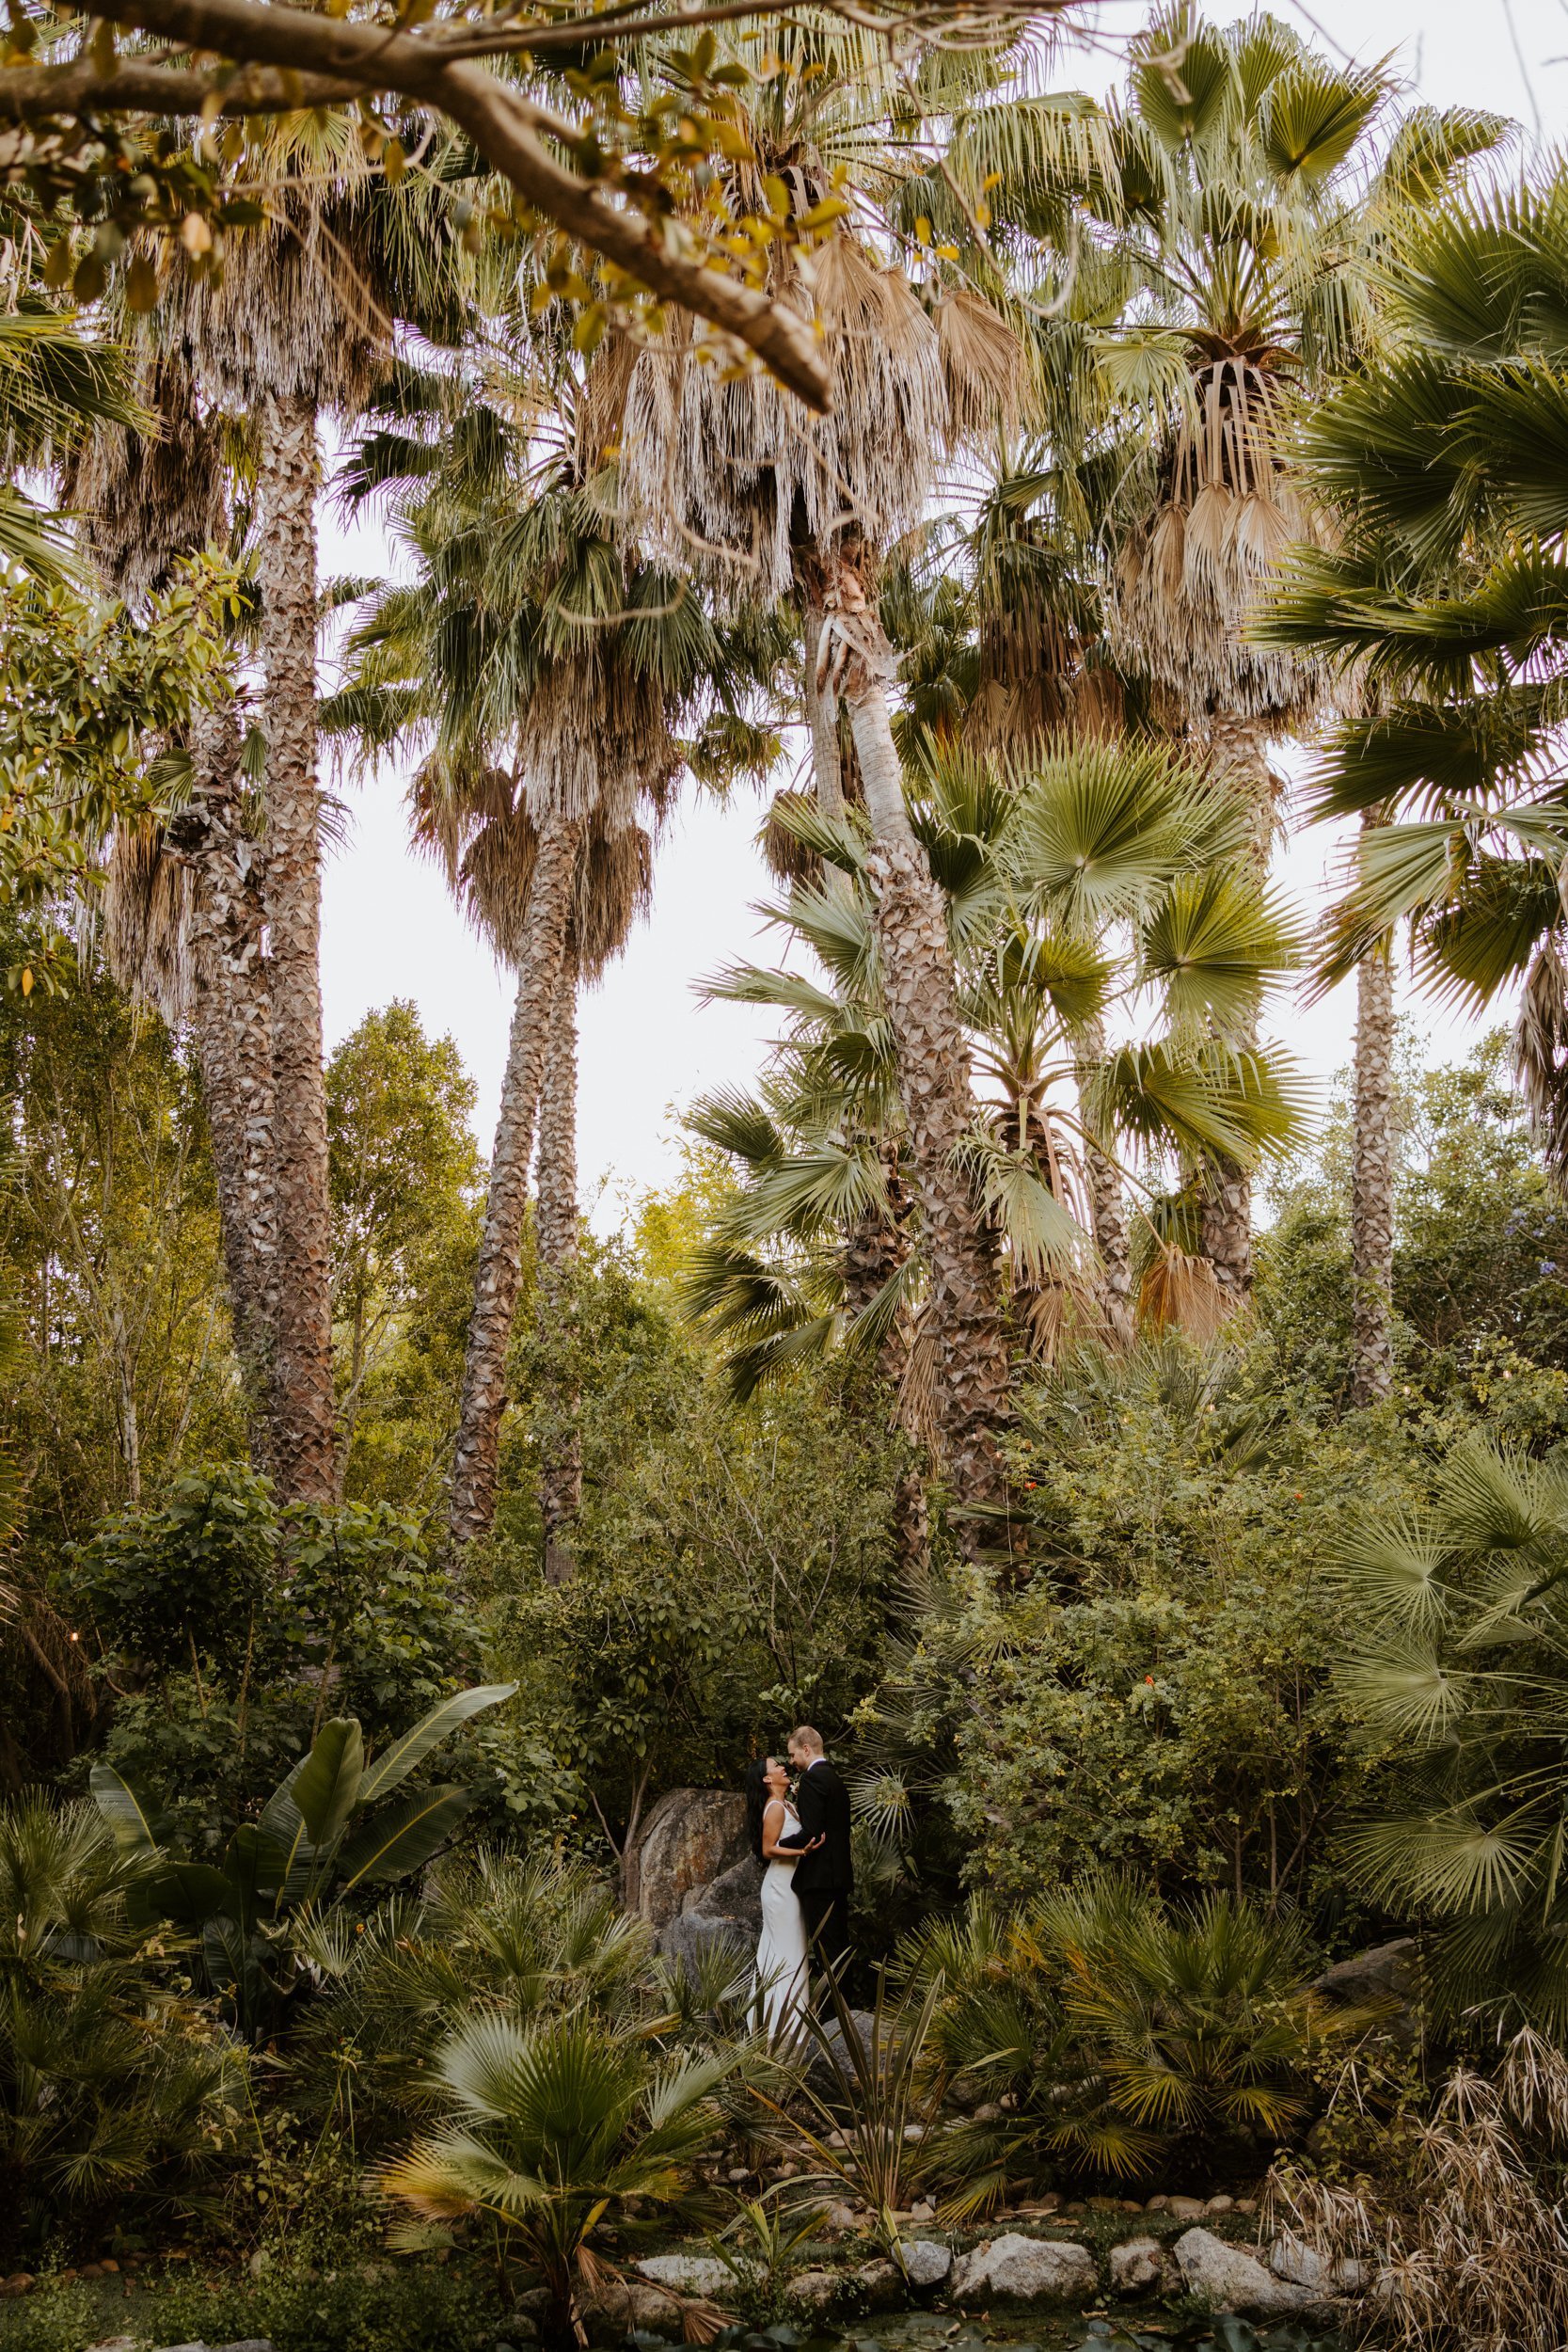  Tropical bride and groom wedding photos, Botanica Oceanside wedding, San Diego wedding venue, photo by TIda Svy, San Diego wedding photographer